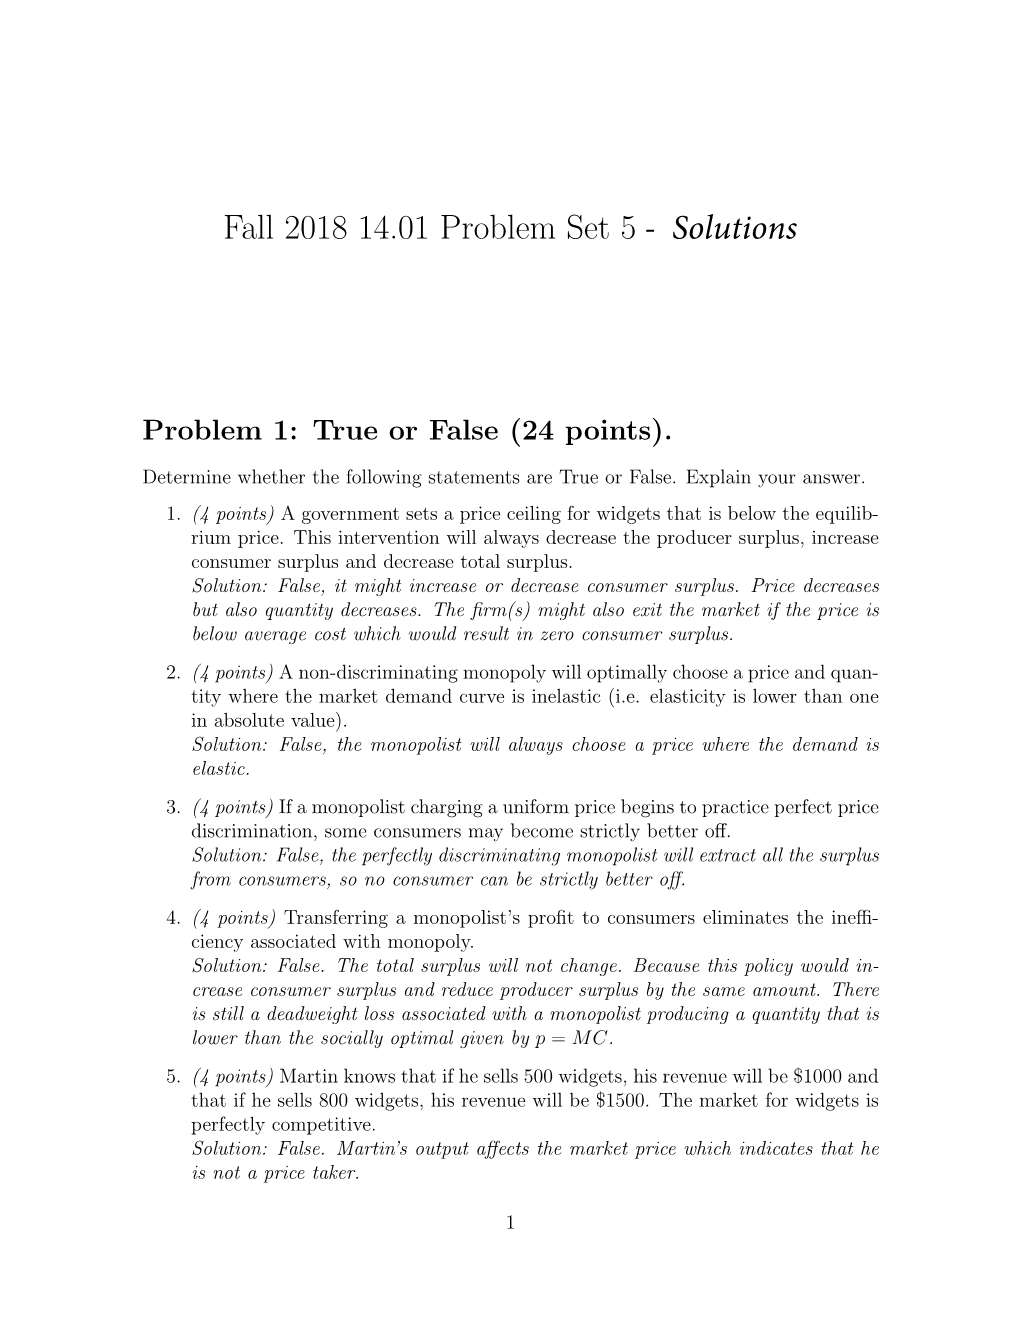 14.01 Fall 2018 Problem Set 5 Solutions